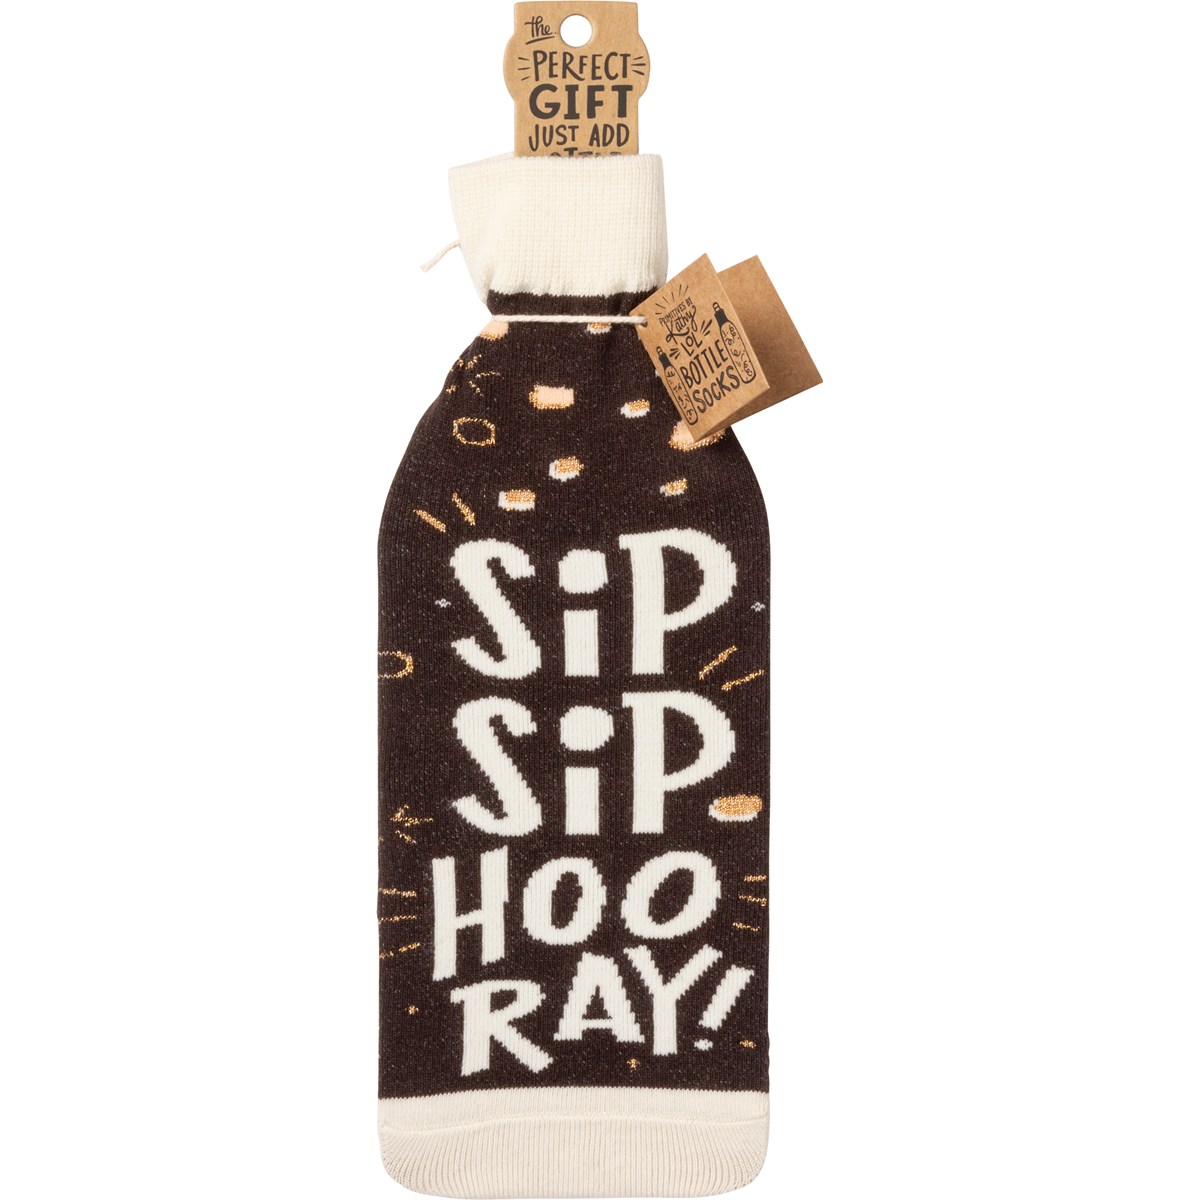 Sip Sip Hooray Drink Up Bottle Sock - Cotton, Nylon, Spandex